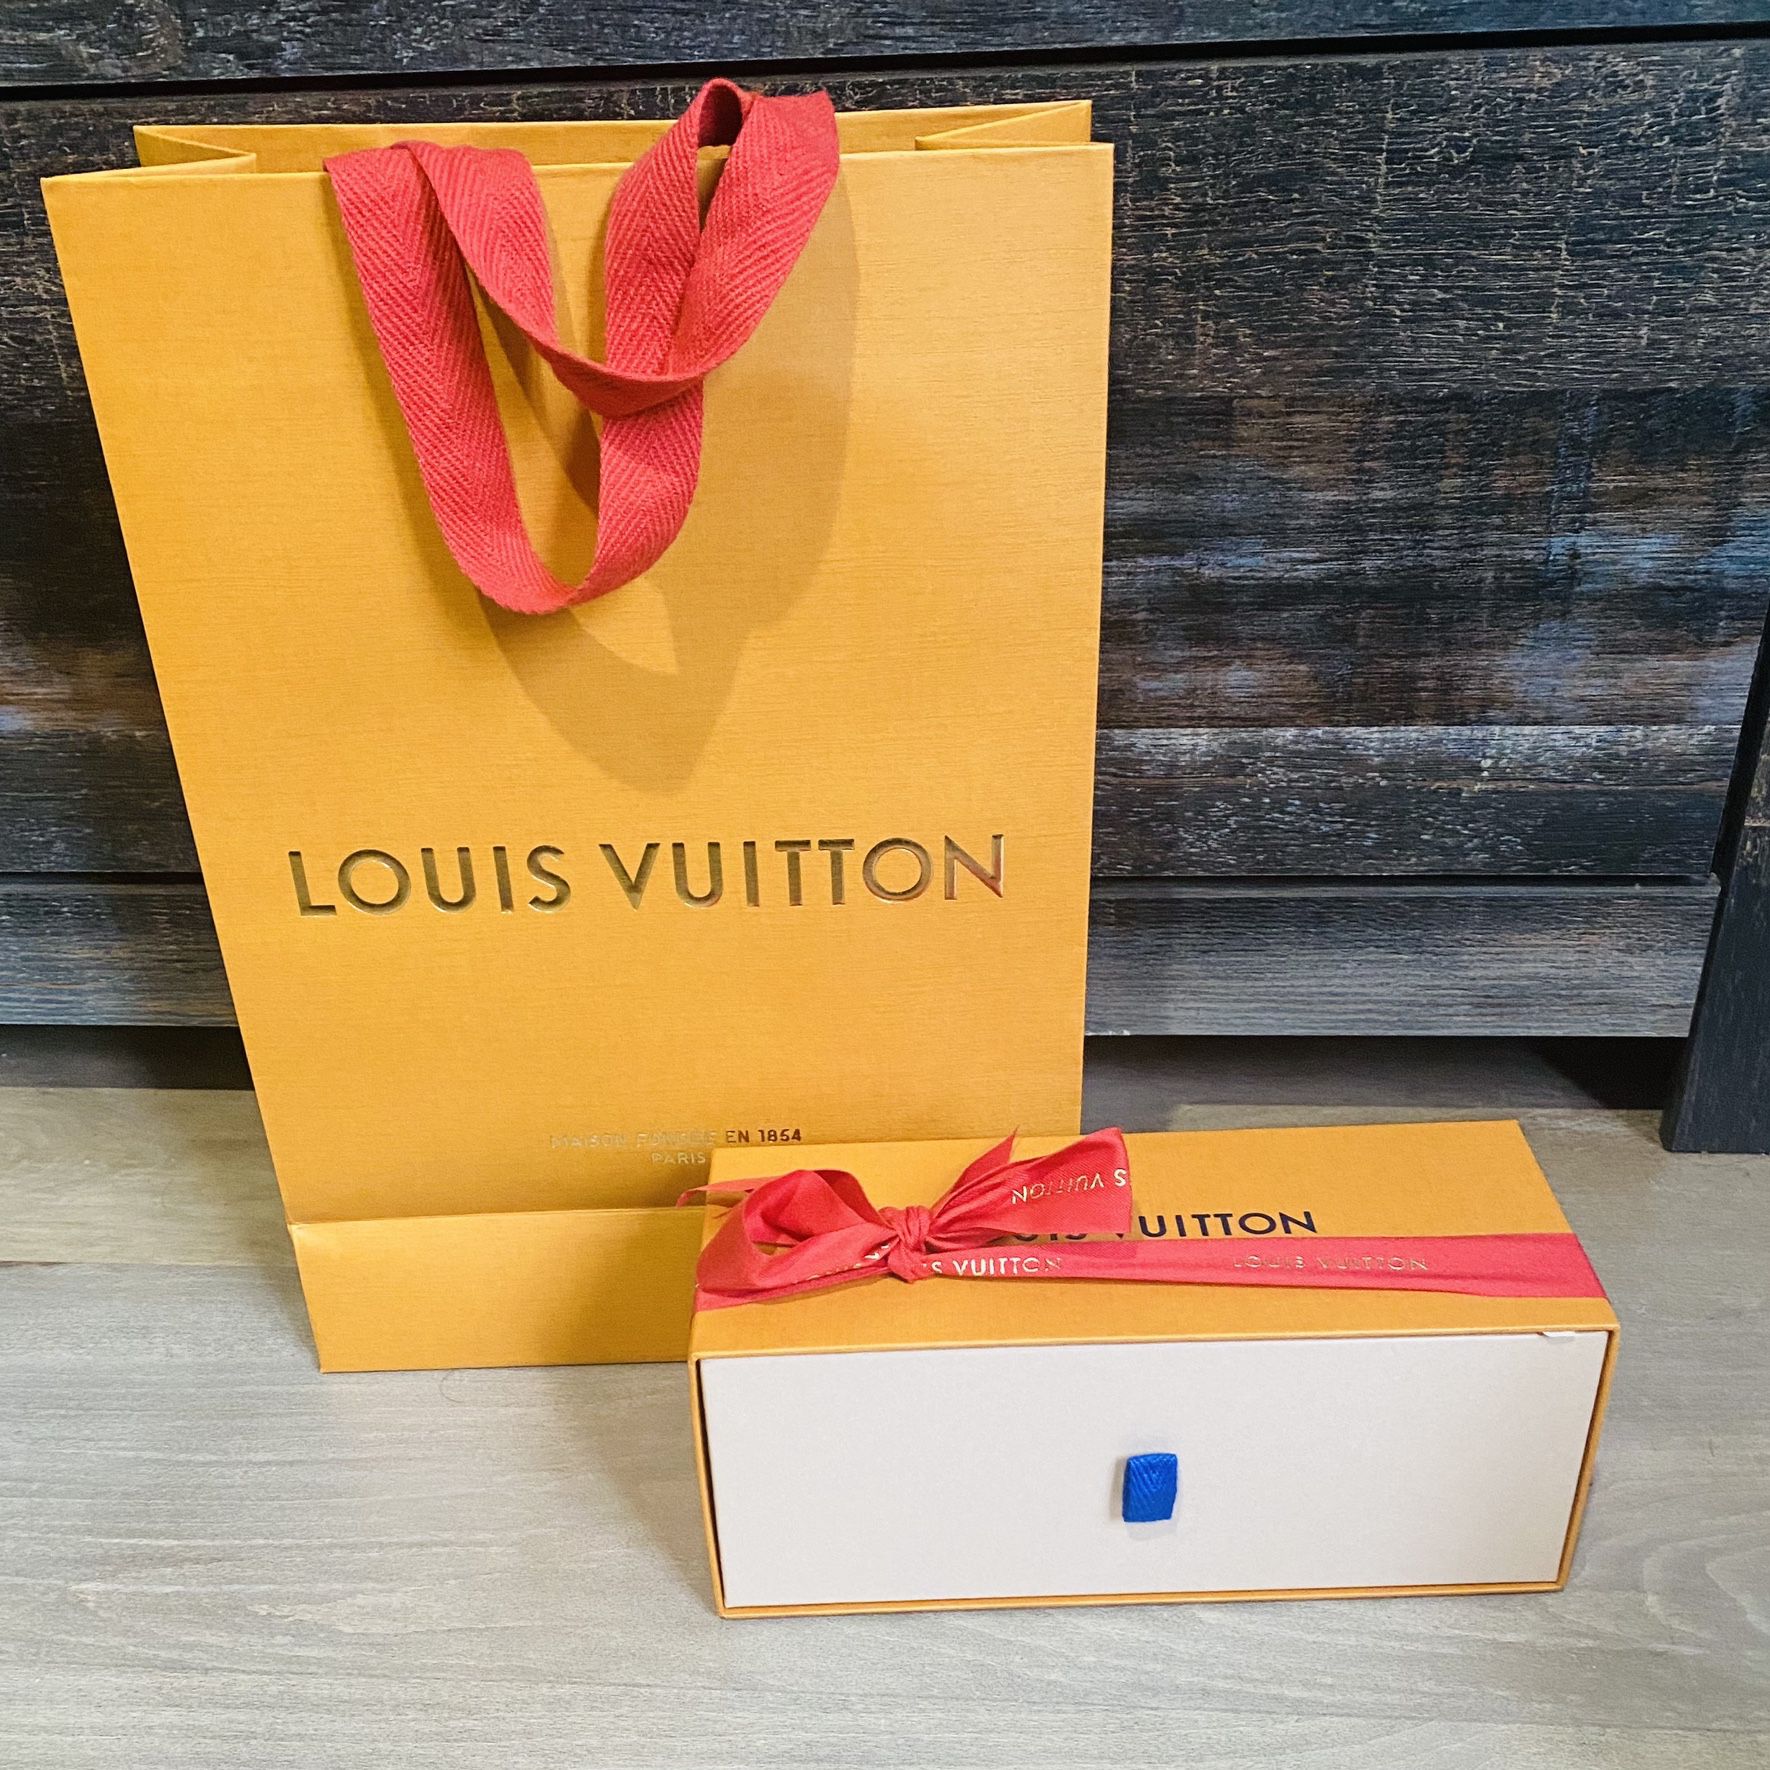 Authentic Louis Vuitton Monogram Métis Bag for Sale in Woodbury, NY -  OfferUp